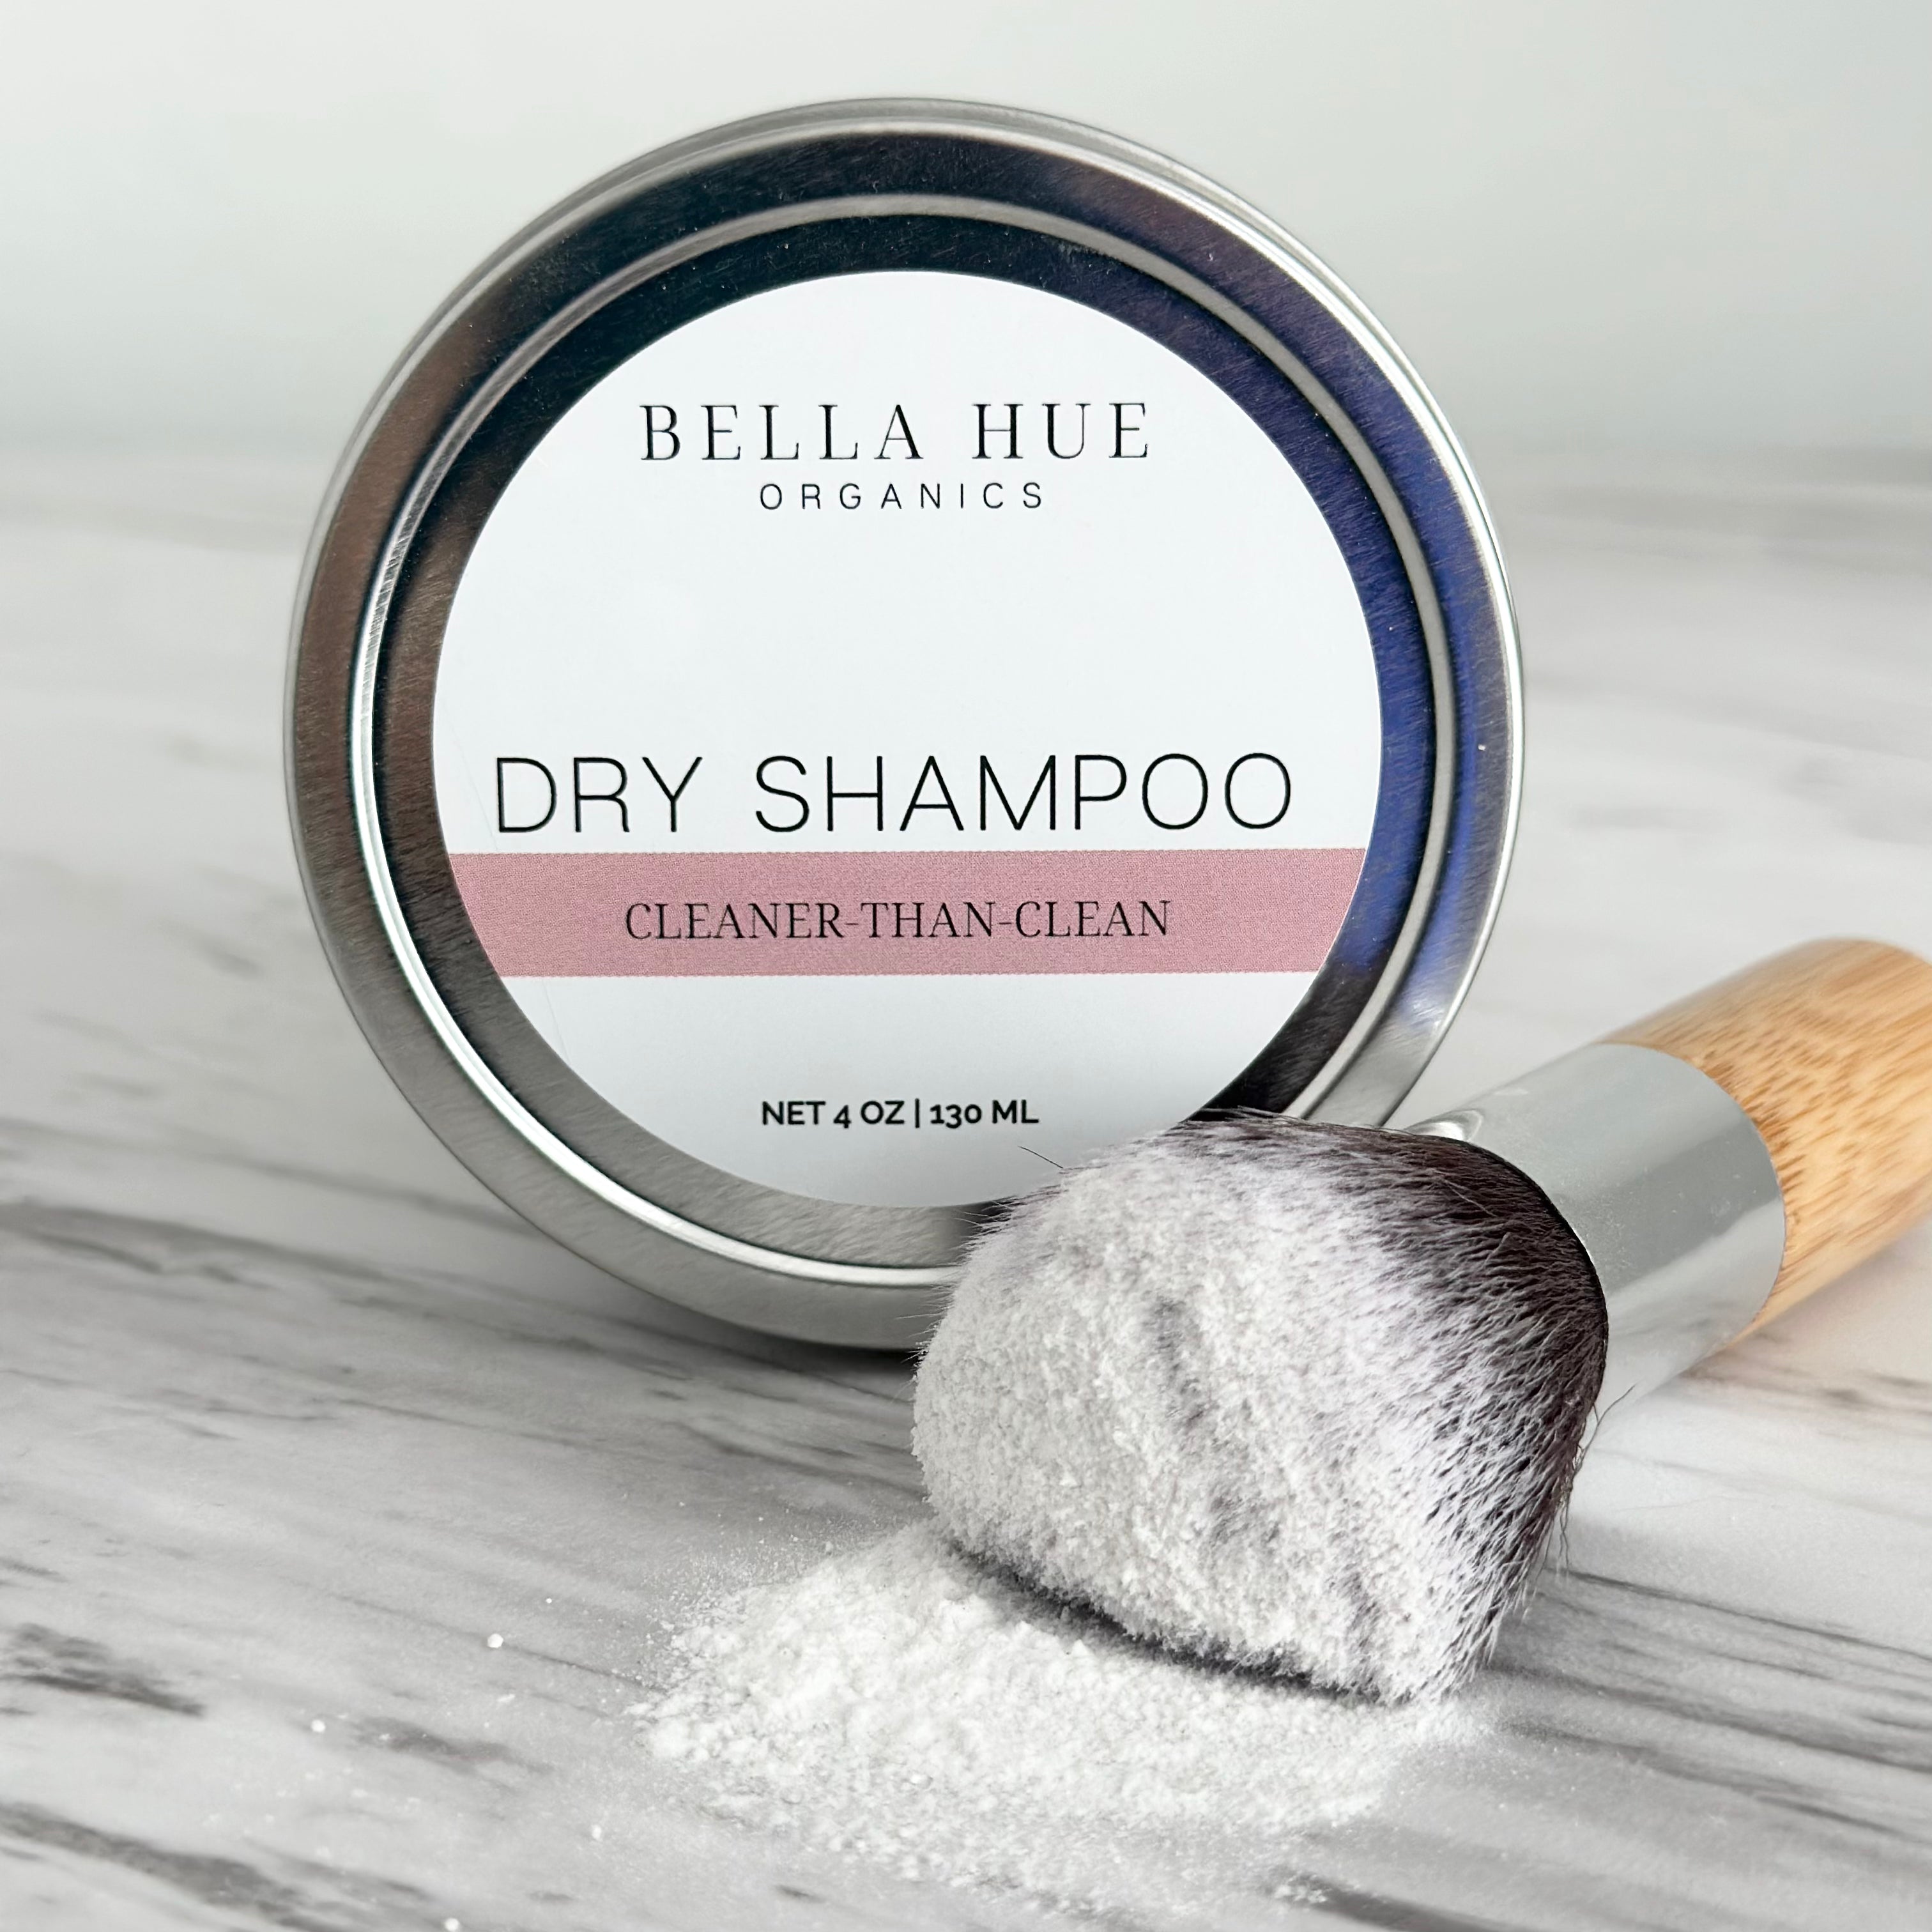 Cleaner-Than-Clean Dry Shampoo